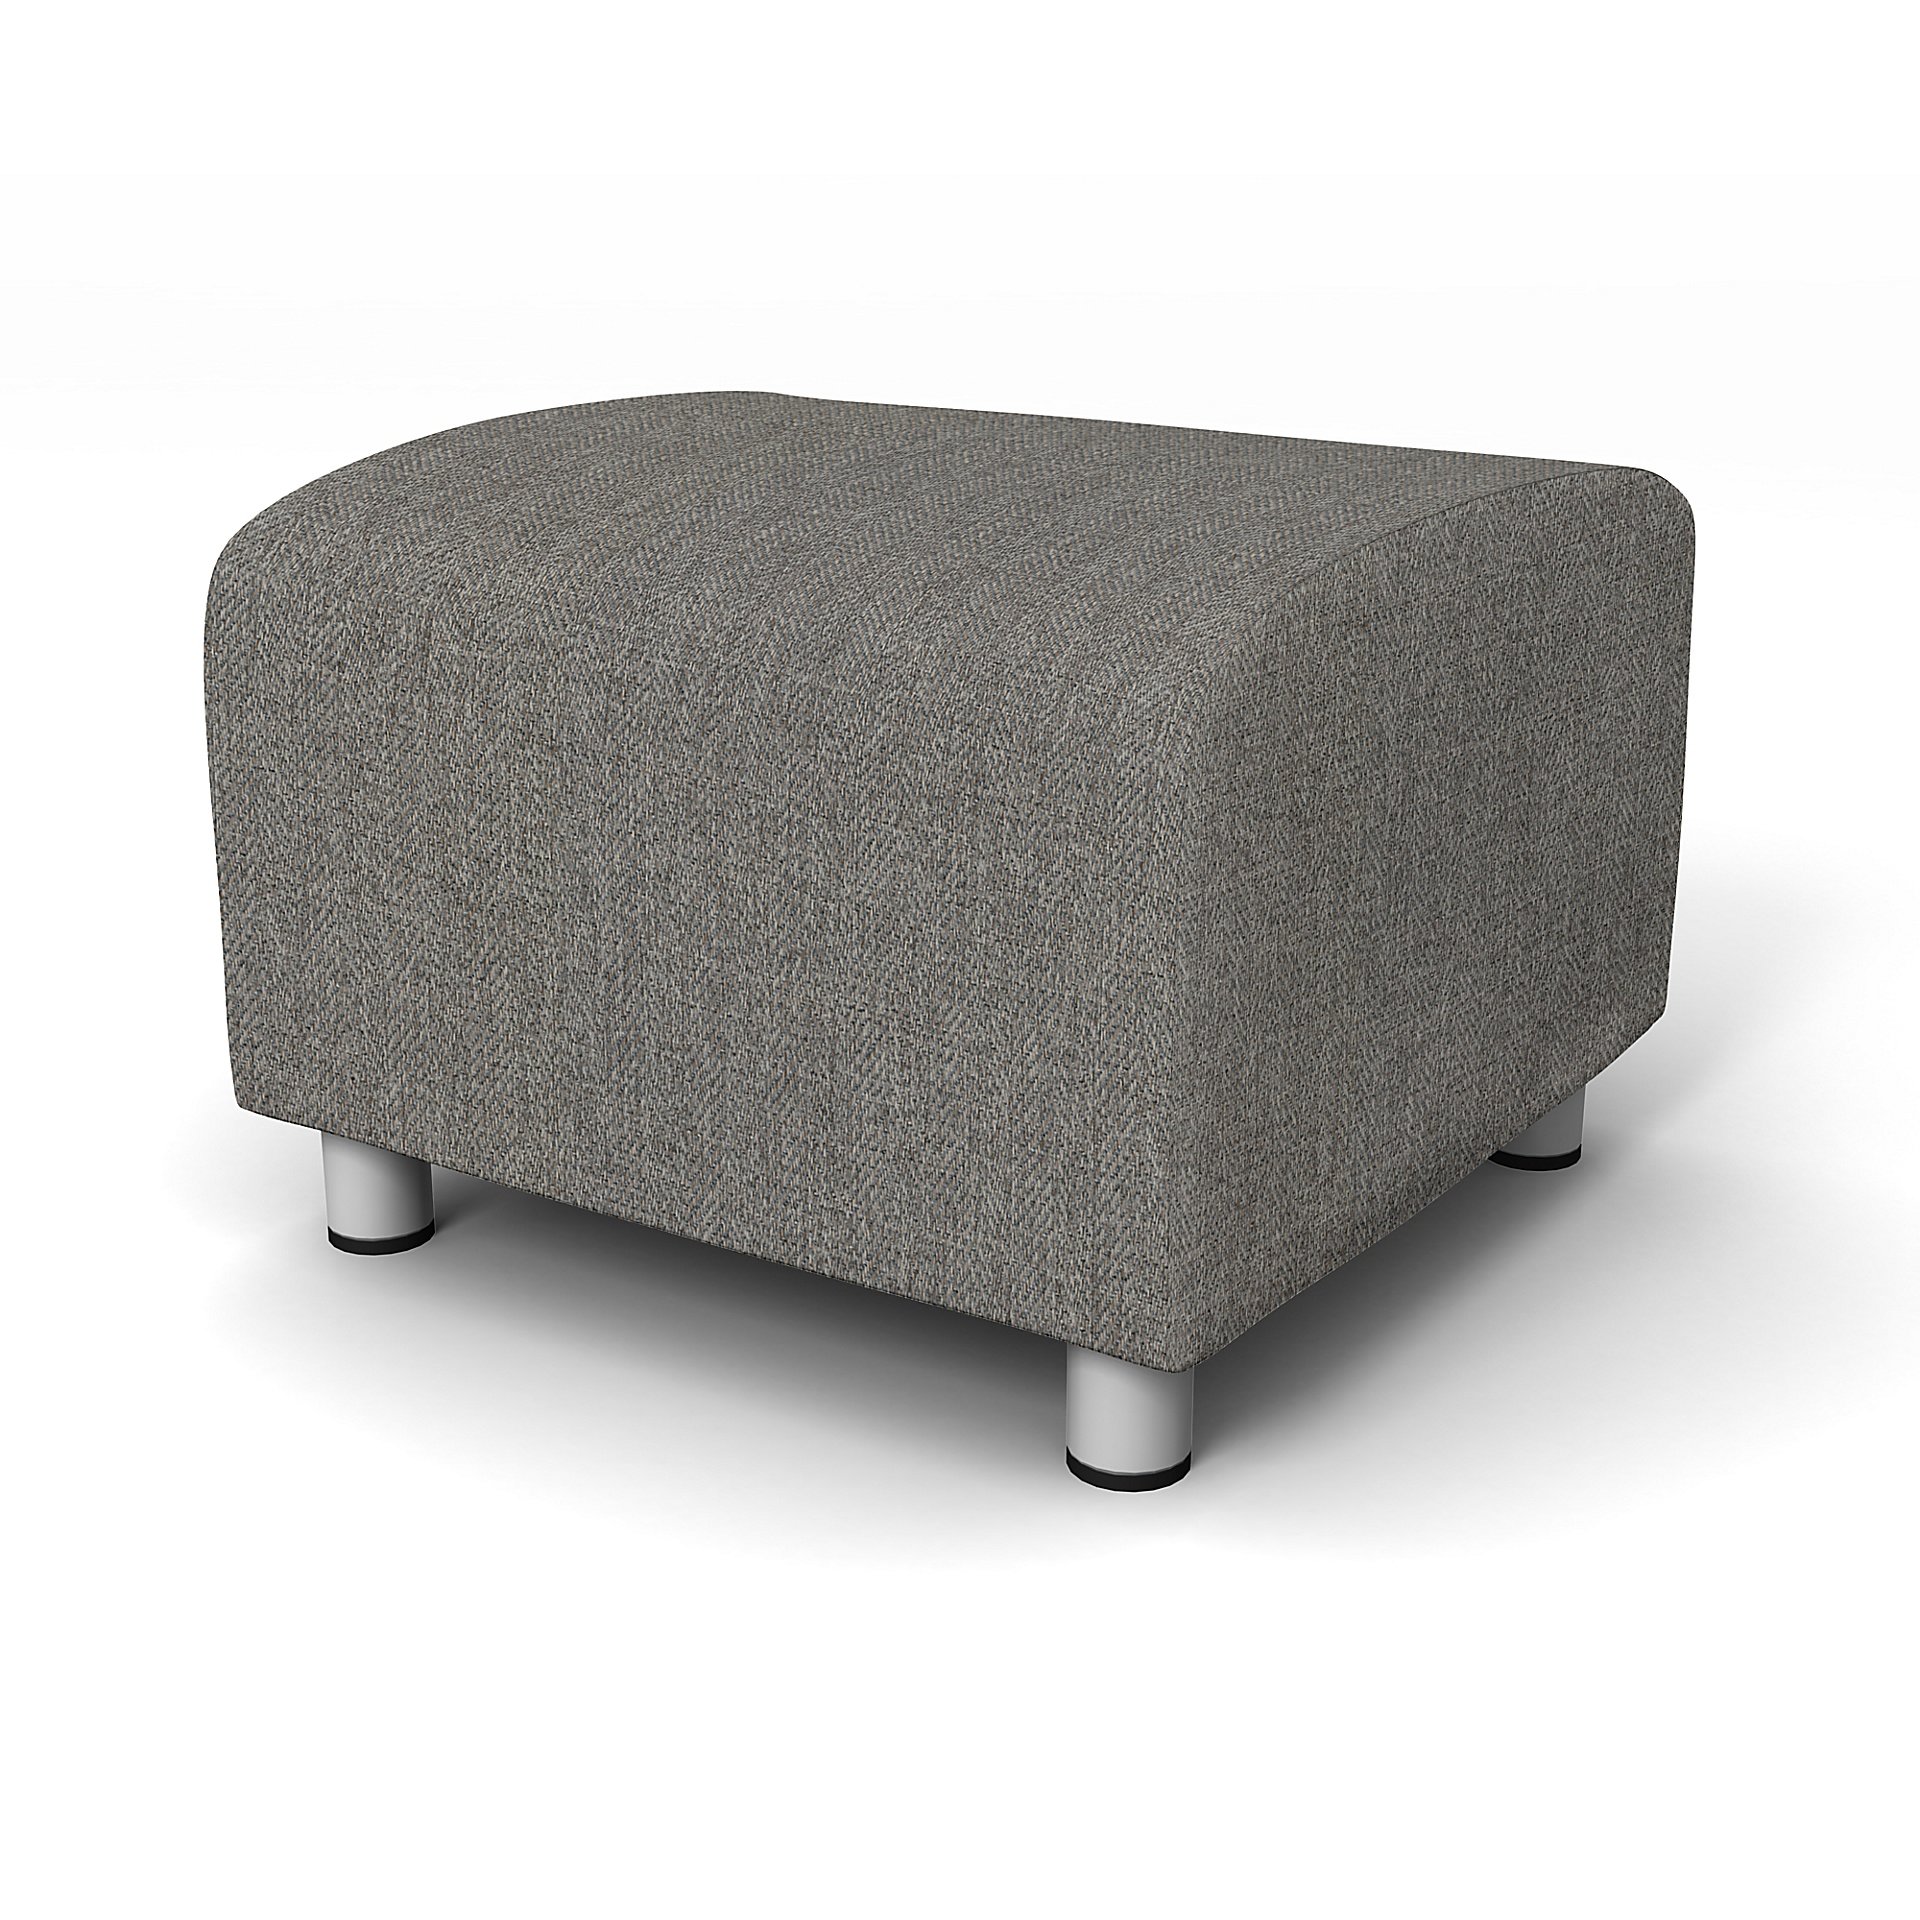 IKEA - Klippan Footstool Cover, Taupe, Boucle & Texture - Bemz